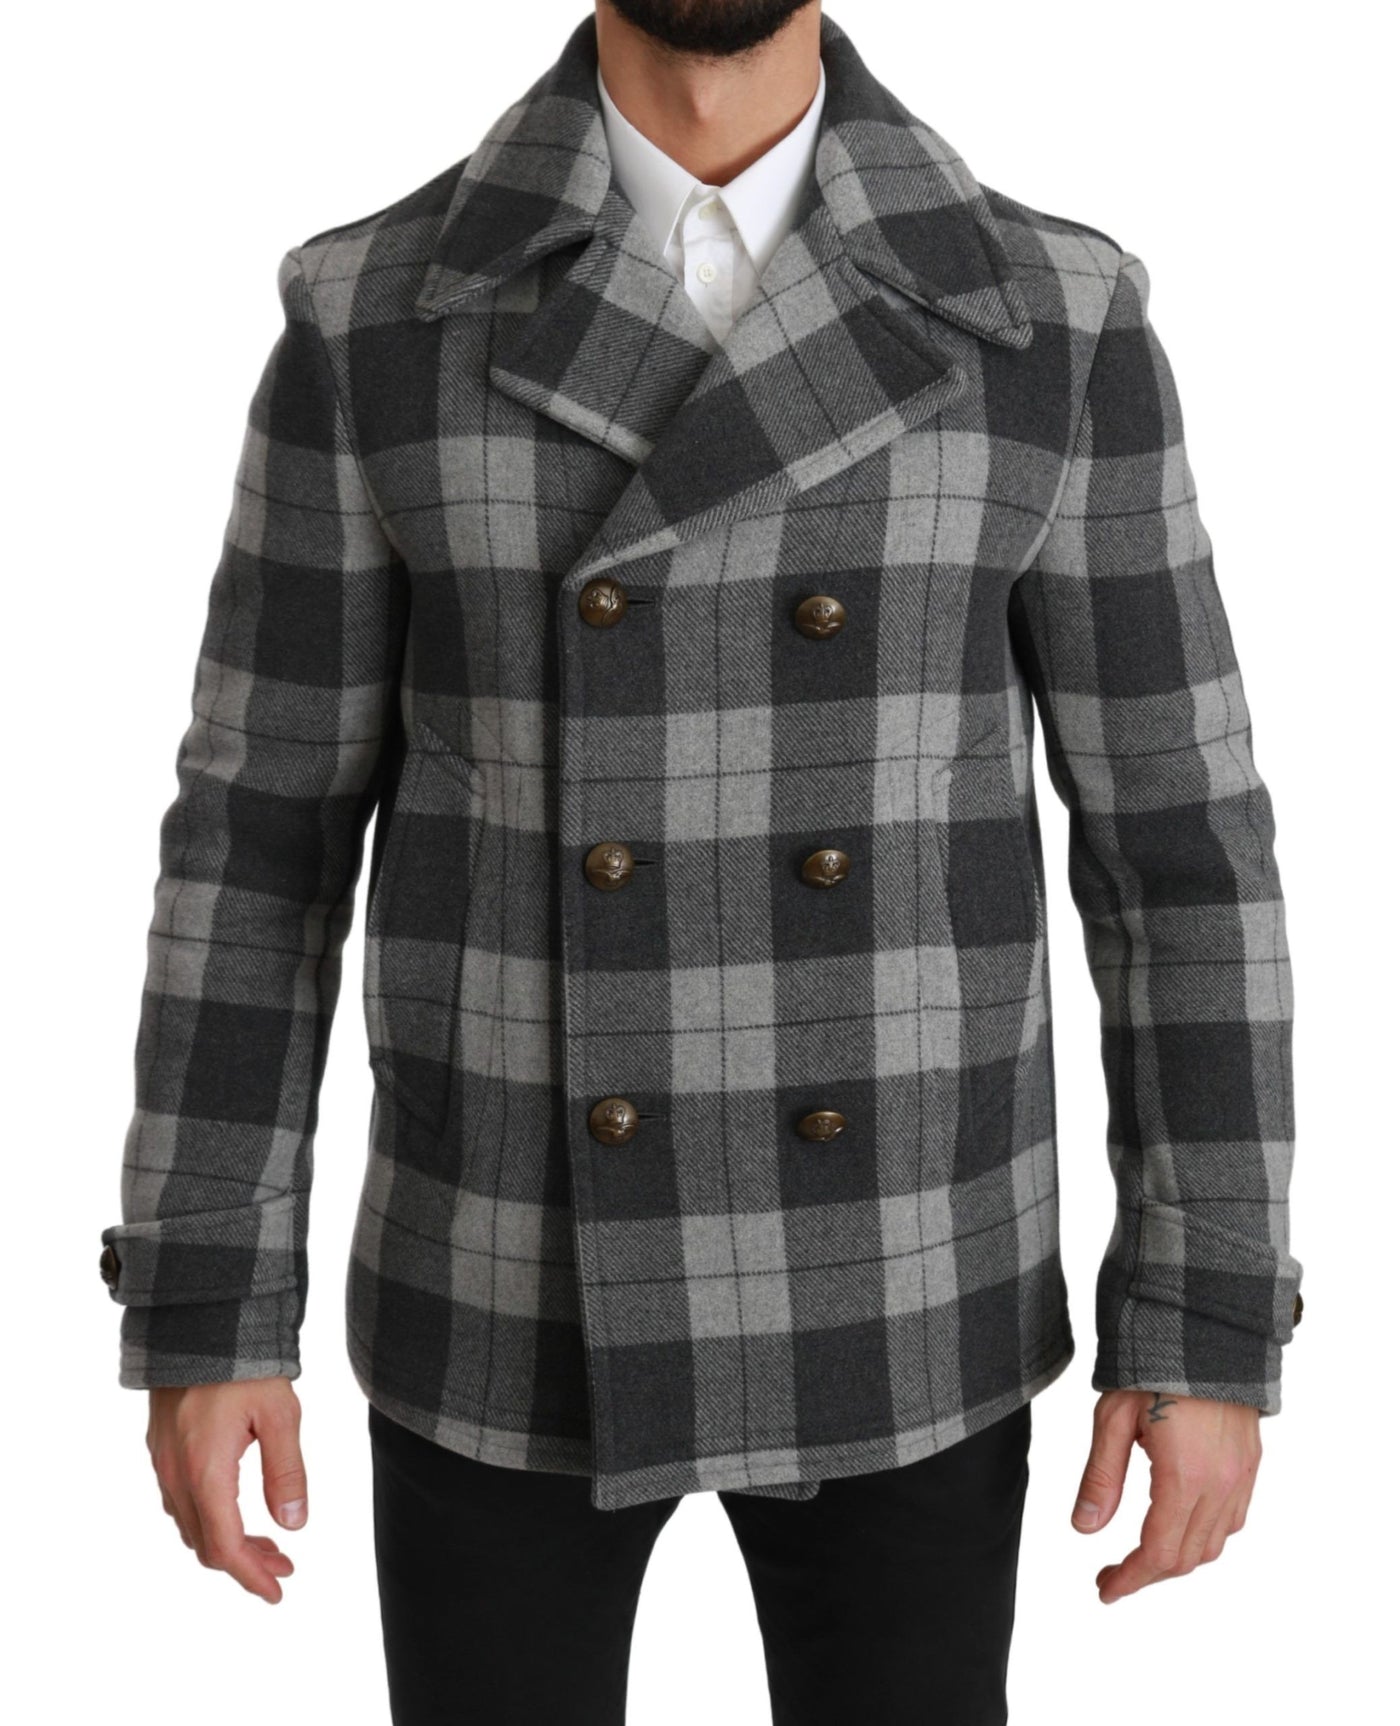 Dolce & Gabbana Gray Check Wool Cashmere Coat Jacket